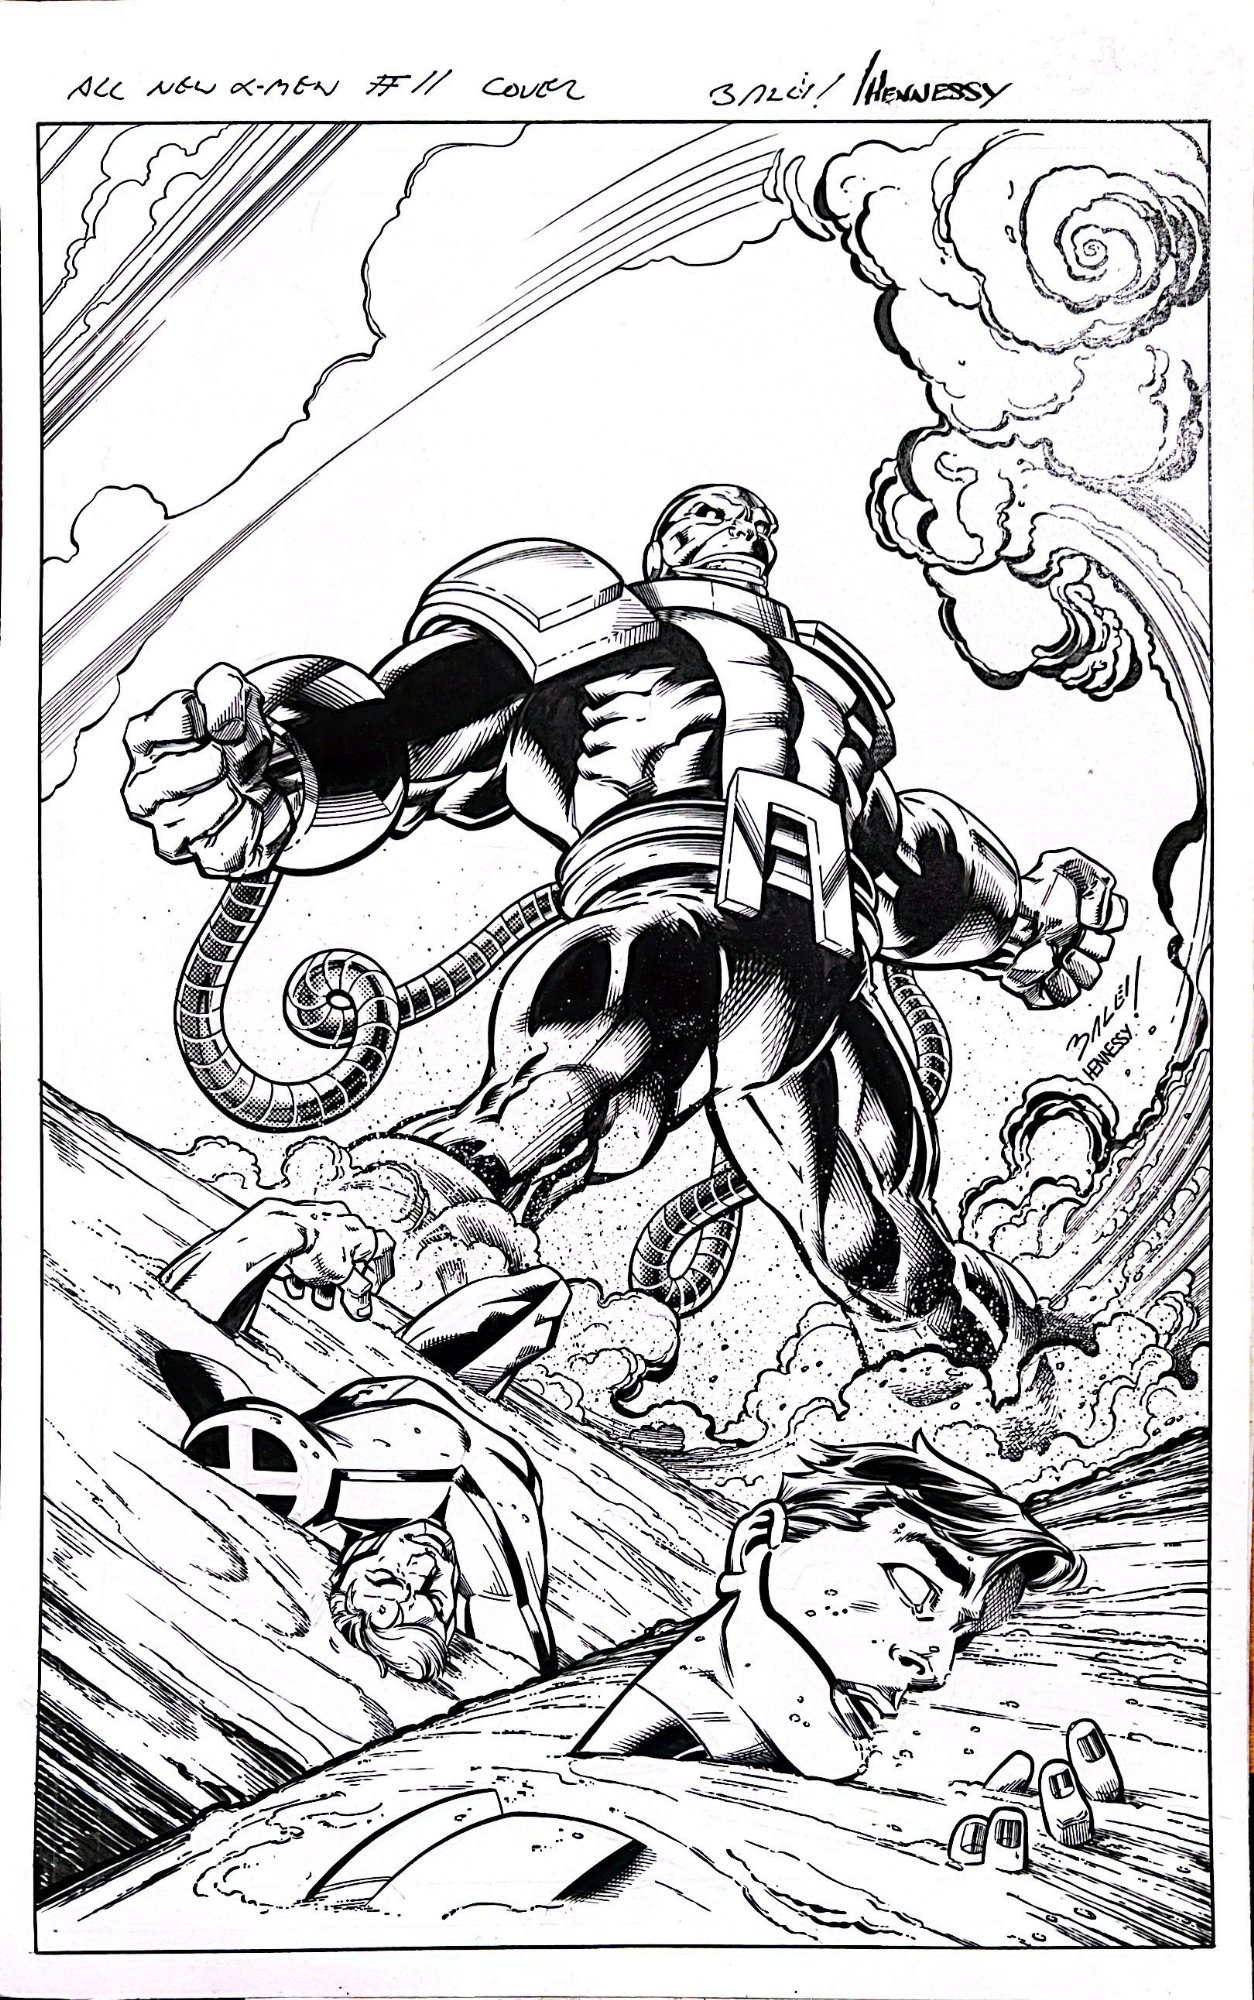 All New X-Men (Vol. 2) #11 COVER , in Simon . K 's X-Men Comic Art ...